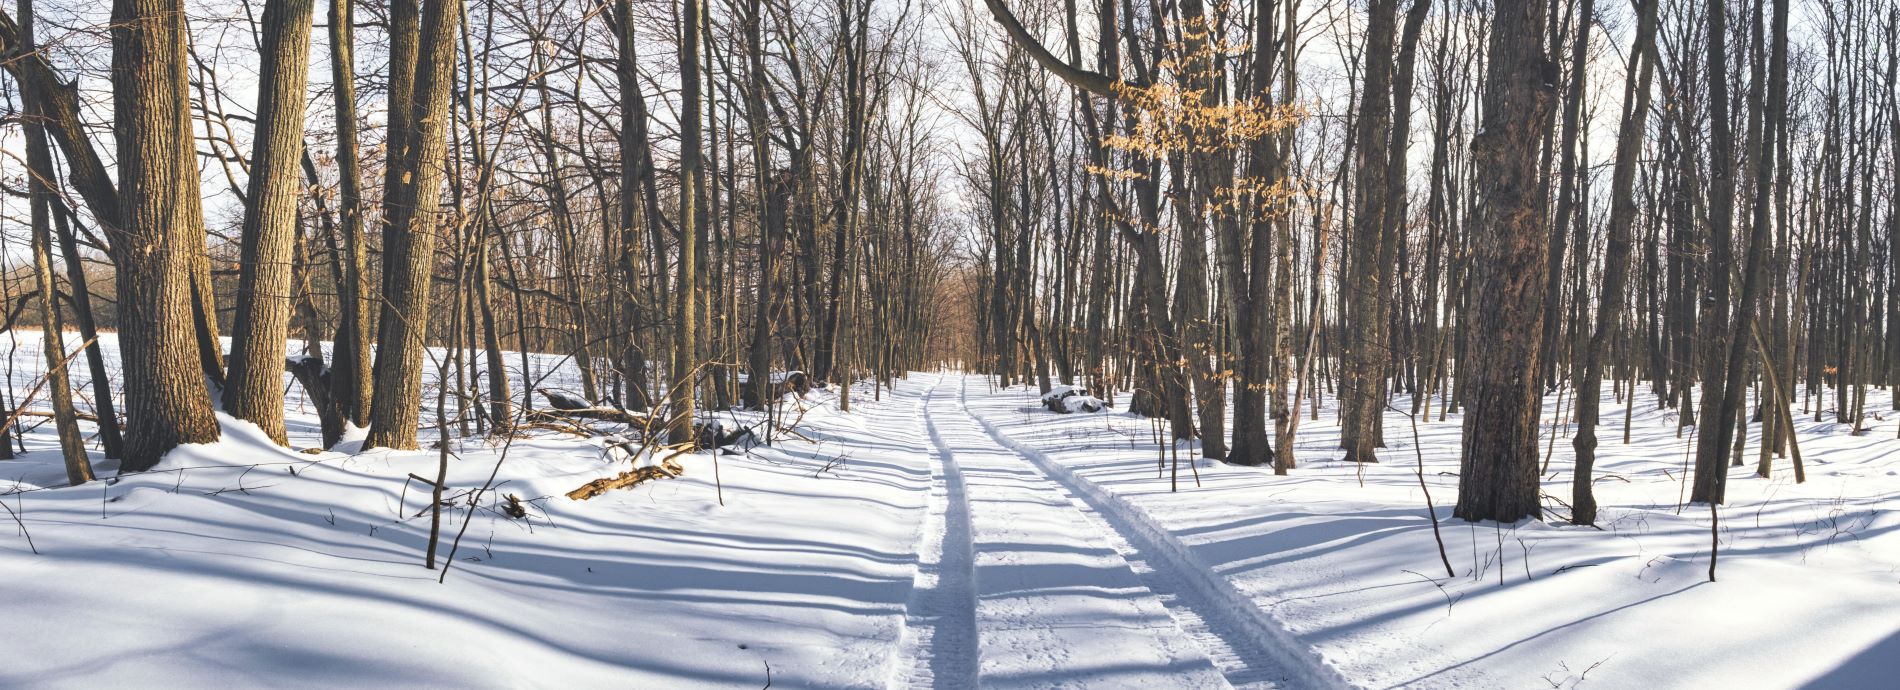 winter trail through rural countryside